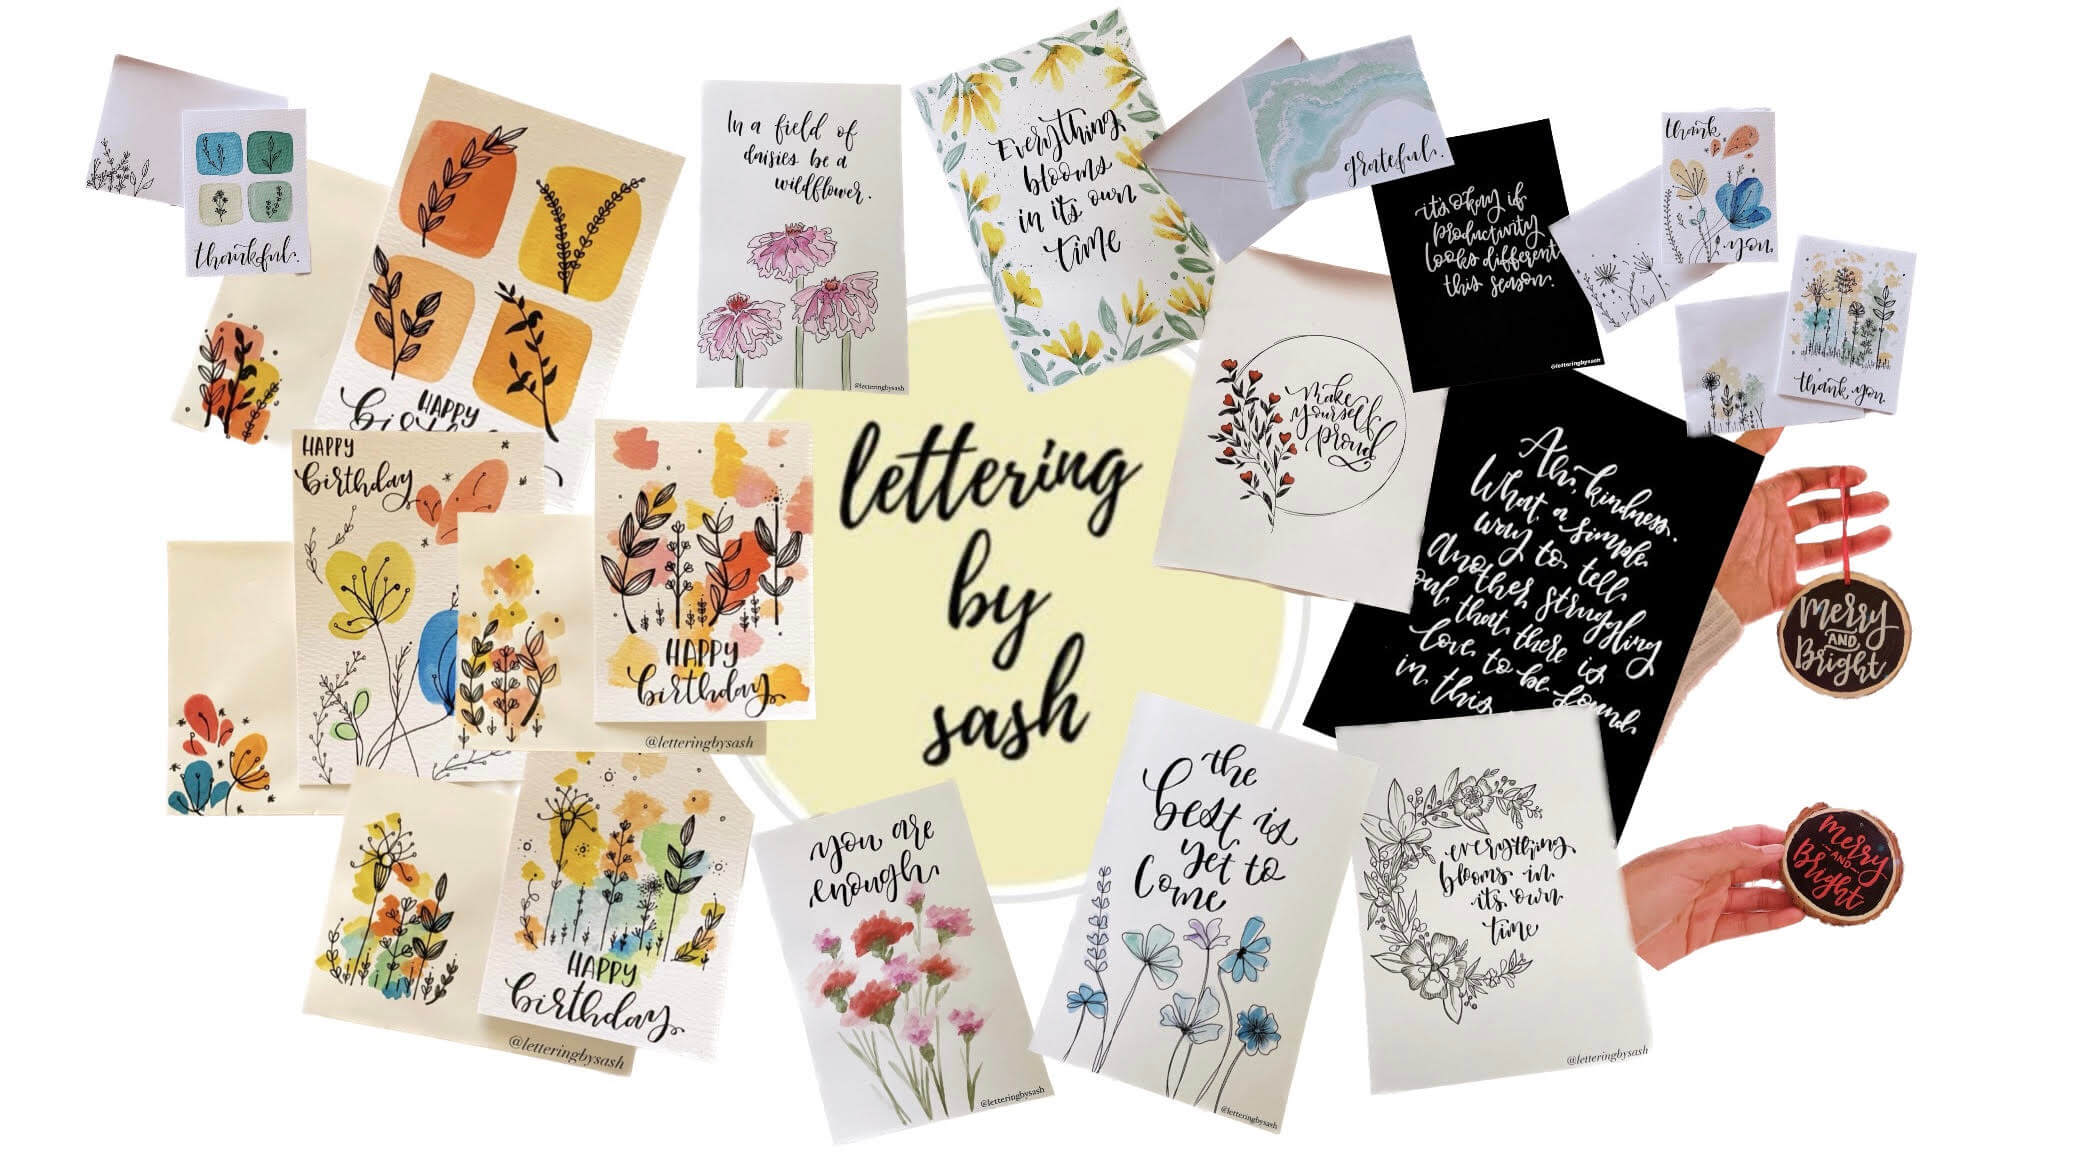 Samples of cards designed by Sasha Kadamba